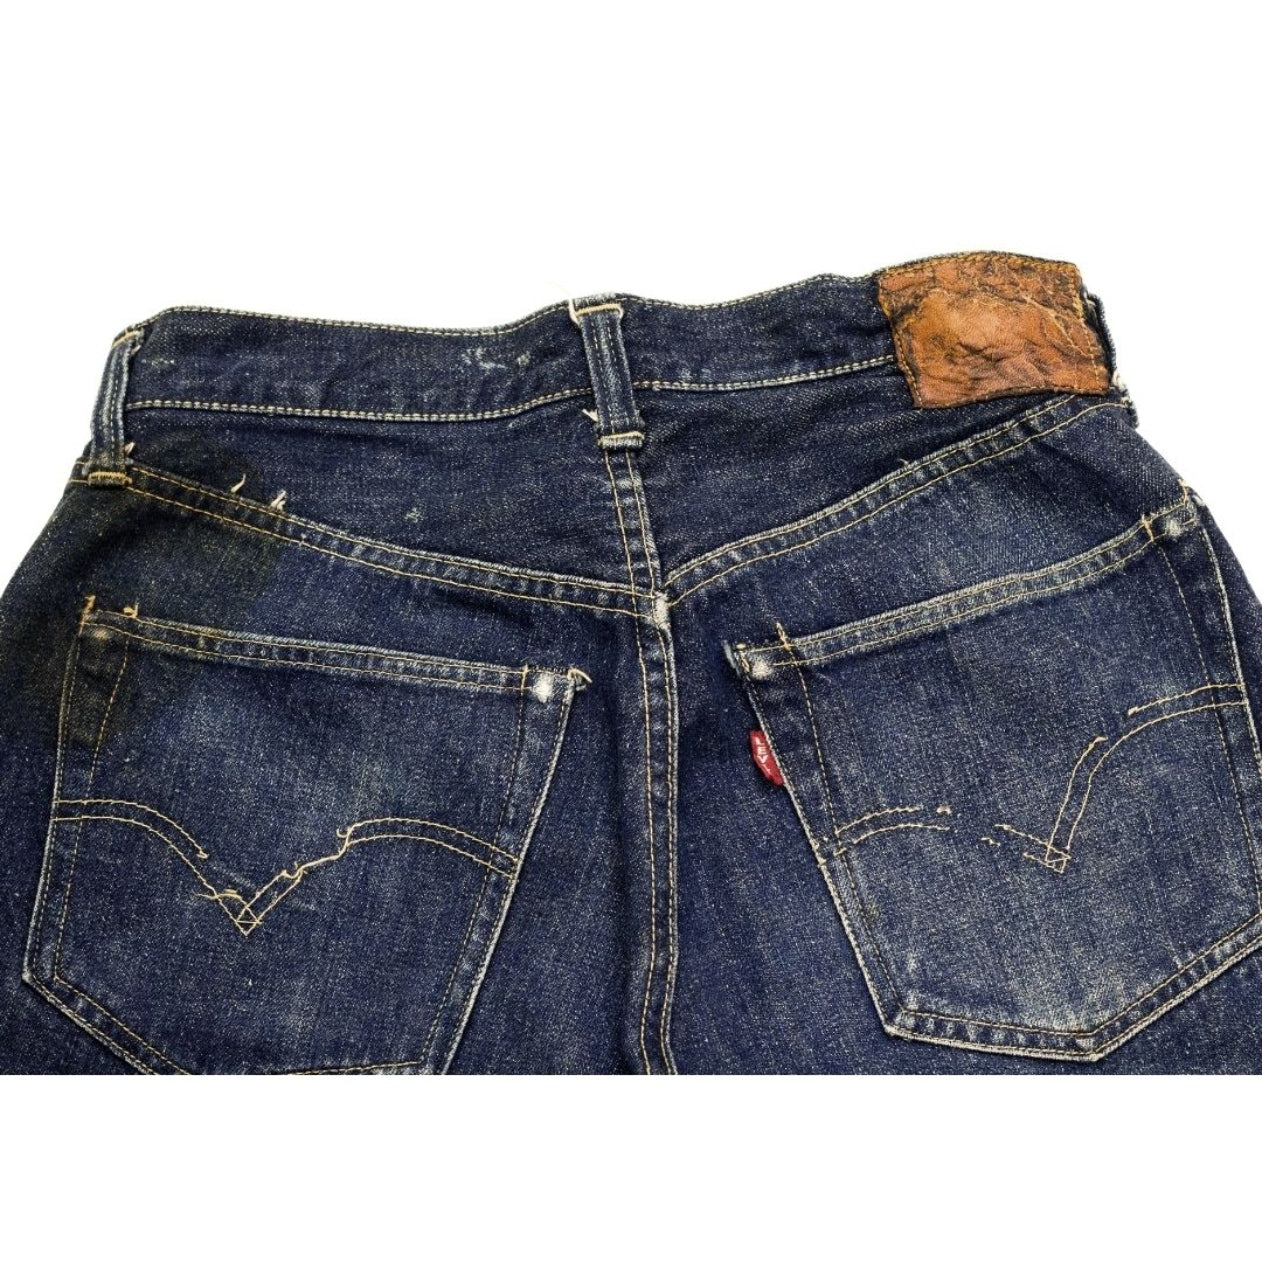 Late 1940s Levi's 501 jeans - very rare W30, L31 - levis – Beyond Retro